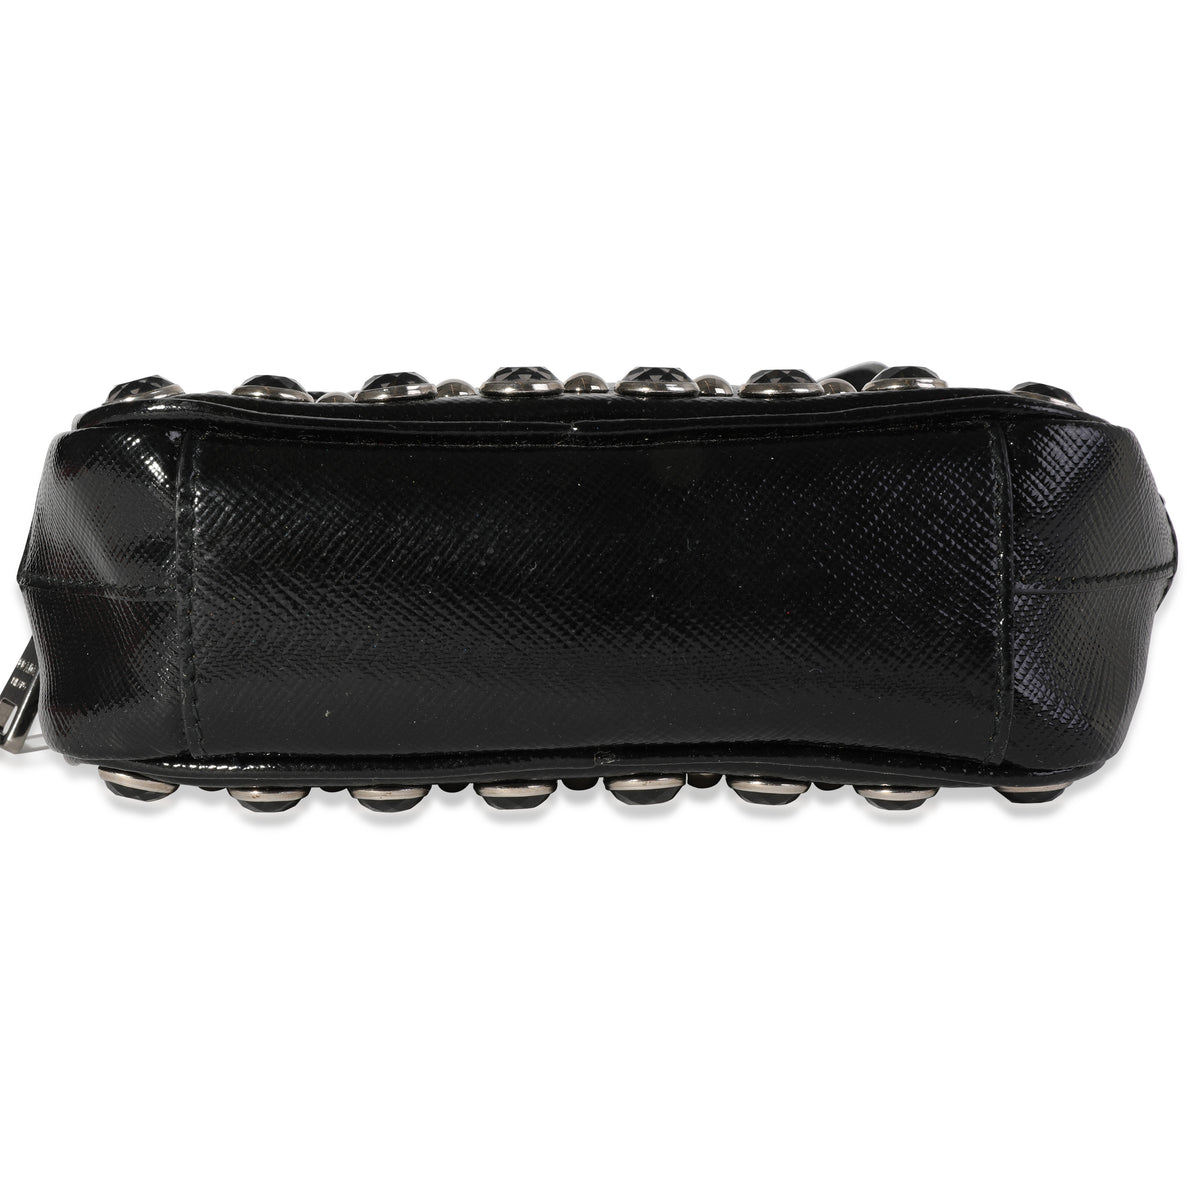 Prada Black Crystal-Embellished Patent Saffiano Leather Mini